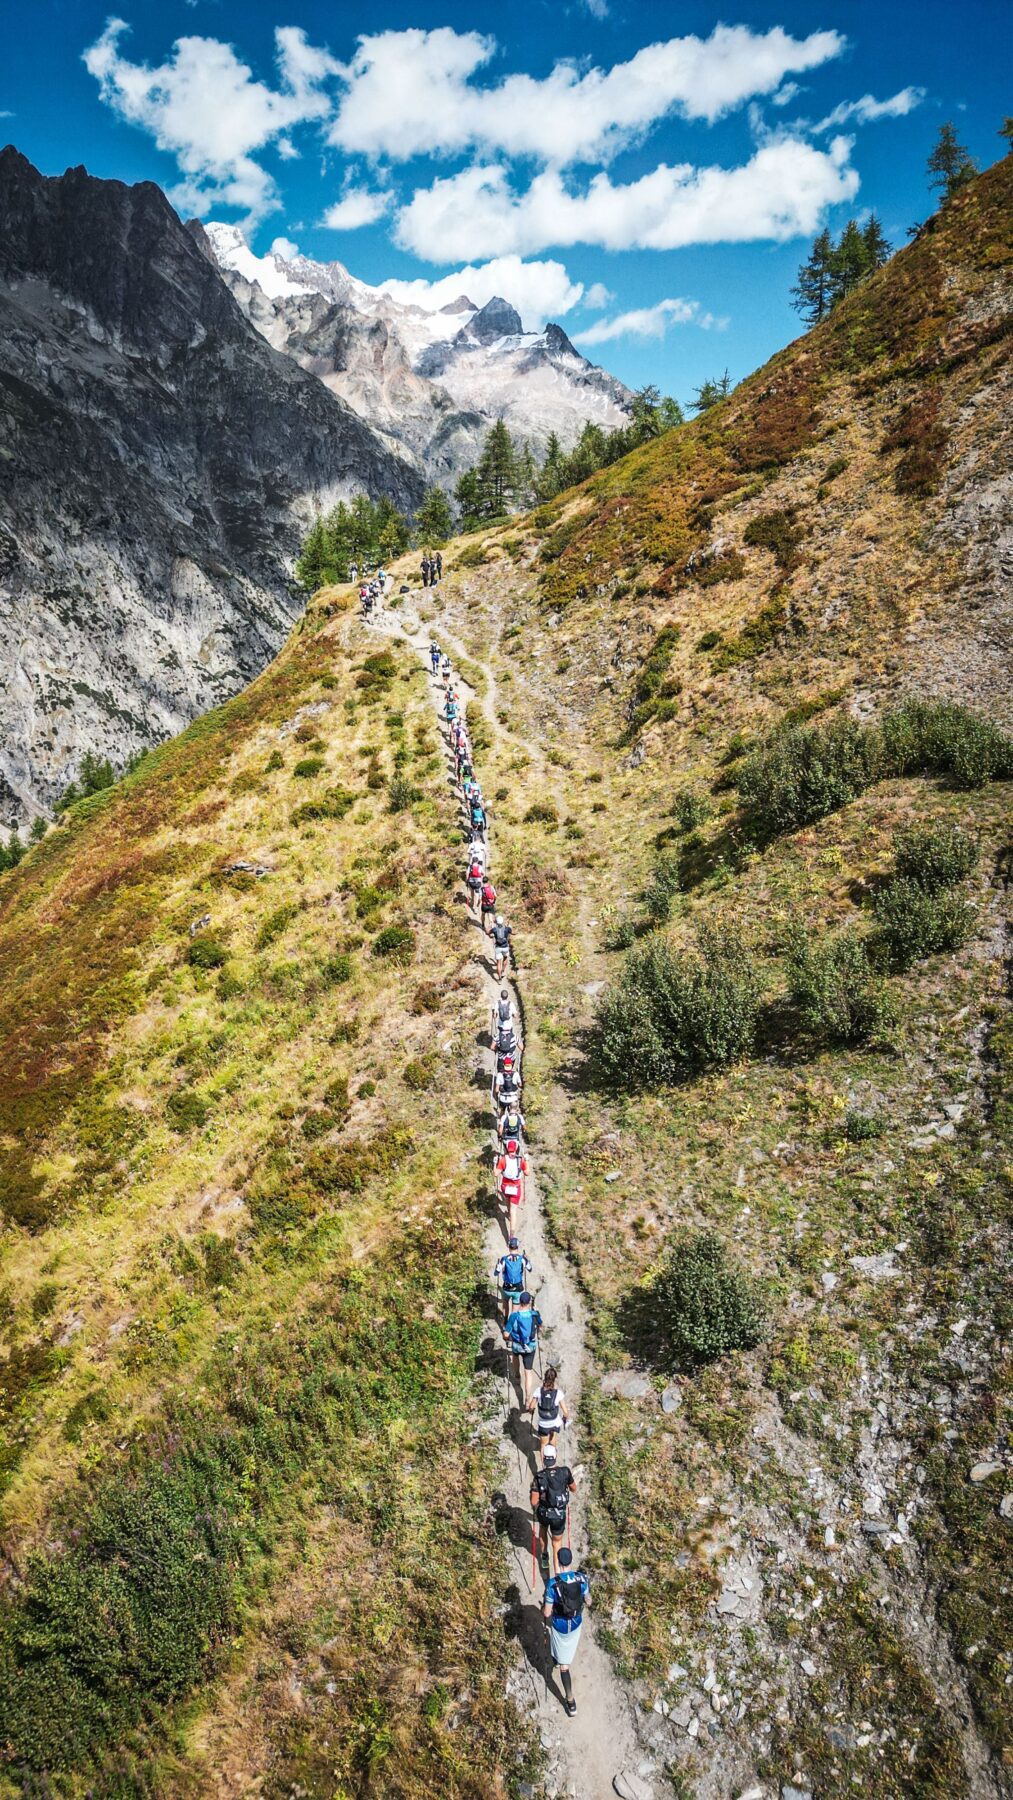 Trailrunning tijdens UTMB in Chamonix rondom de Mont-Blanc in de Franse, Zwitserse en Italiaanse Alpen